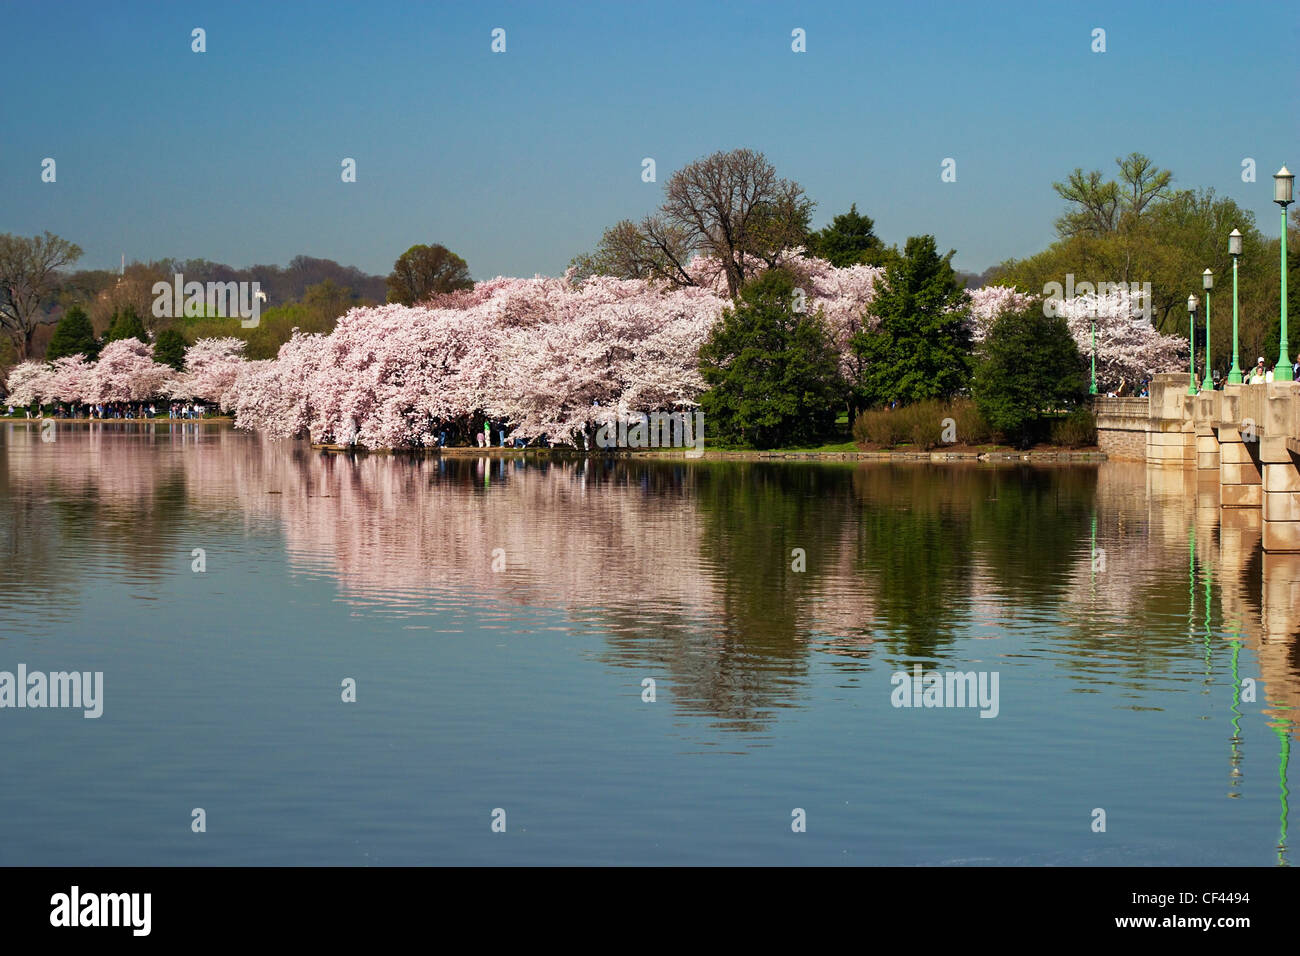 Japanese cherry blossom trees in bloom along the perimeter of the Tidal Basin, Washington; DC. Stock Photo